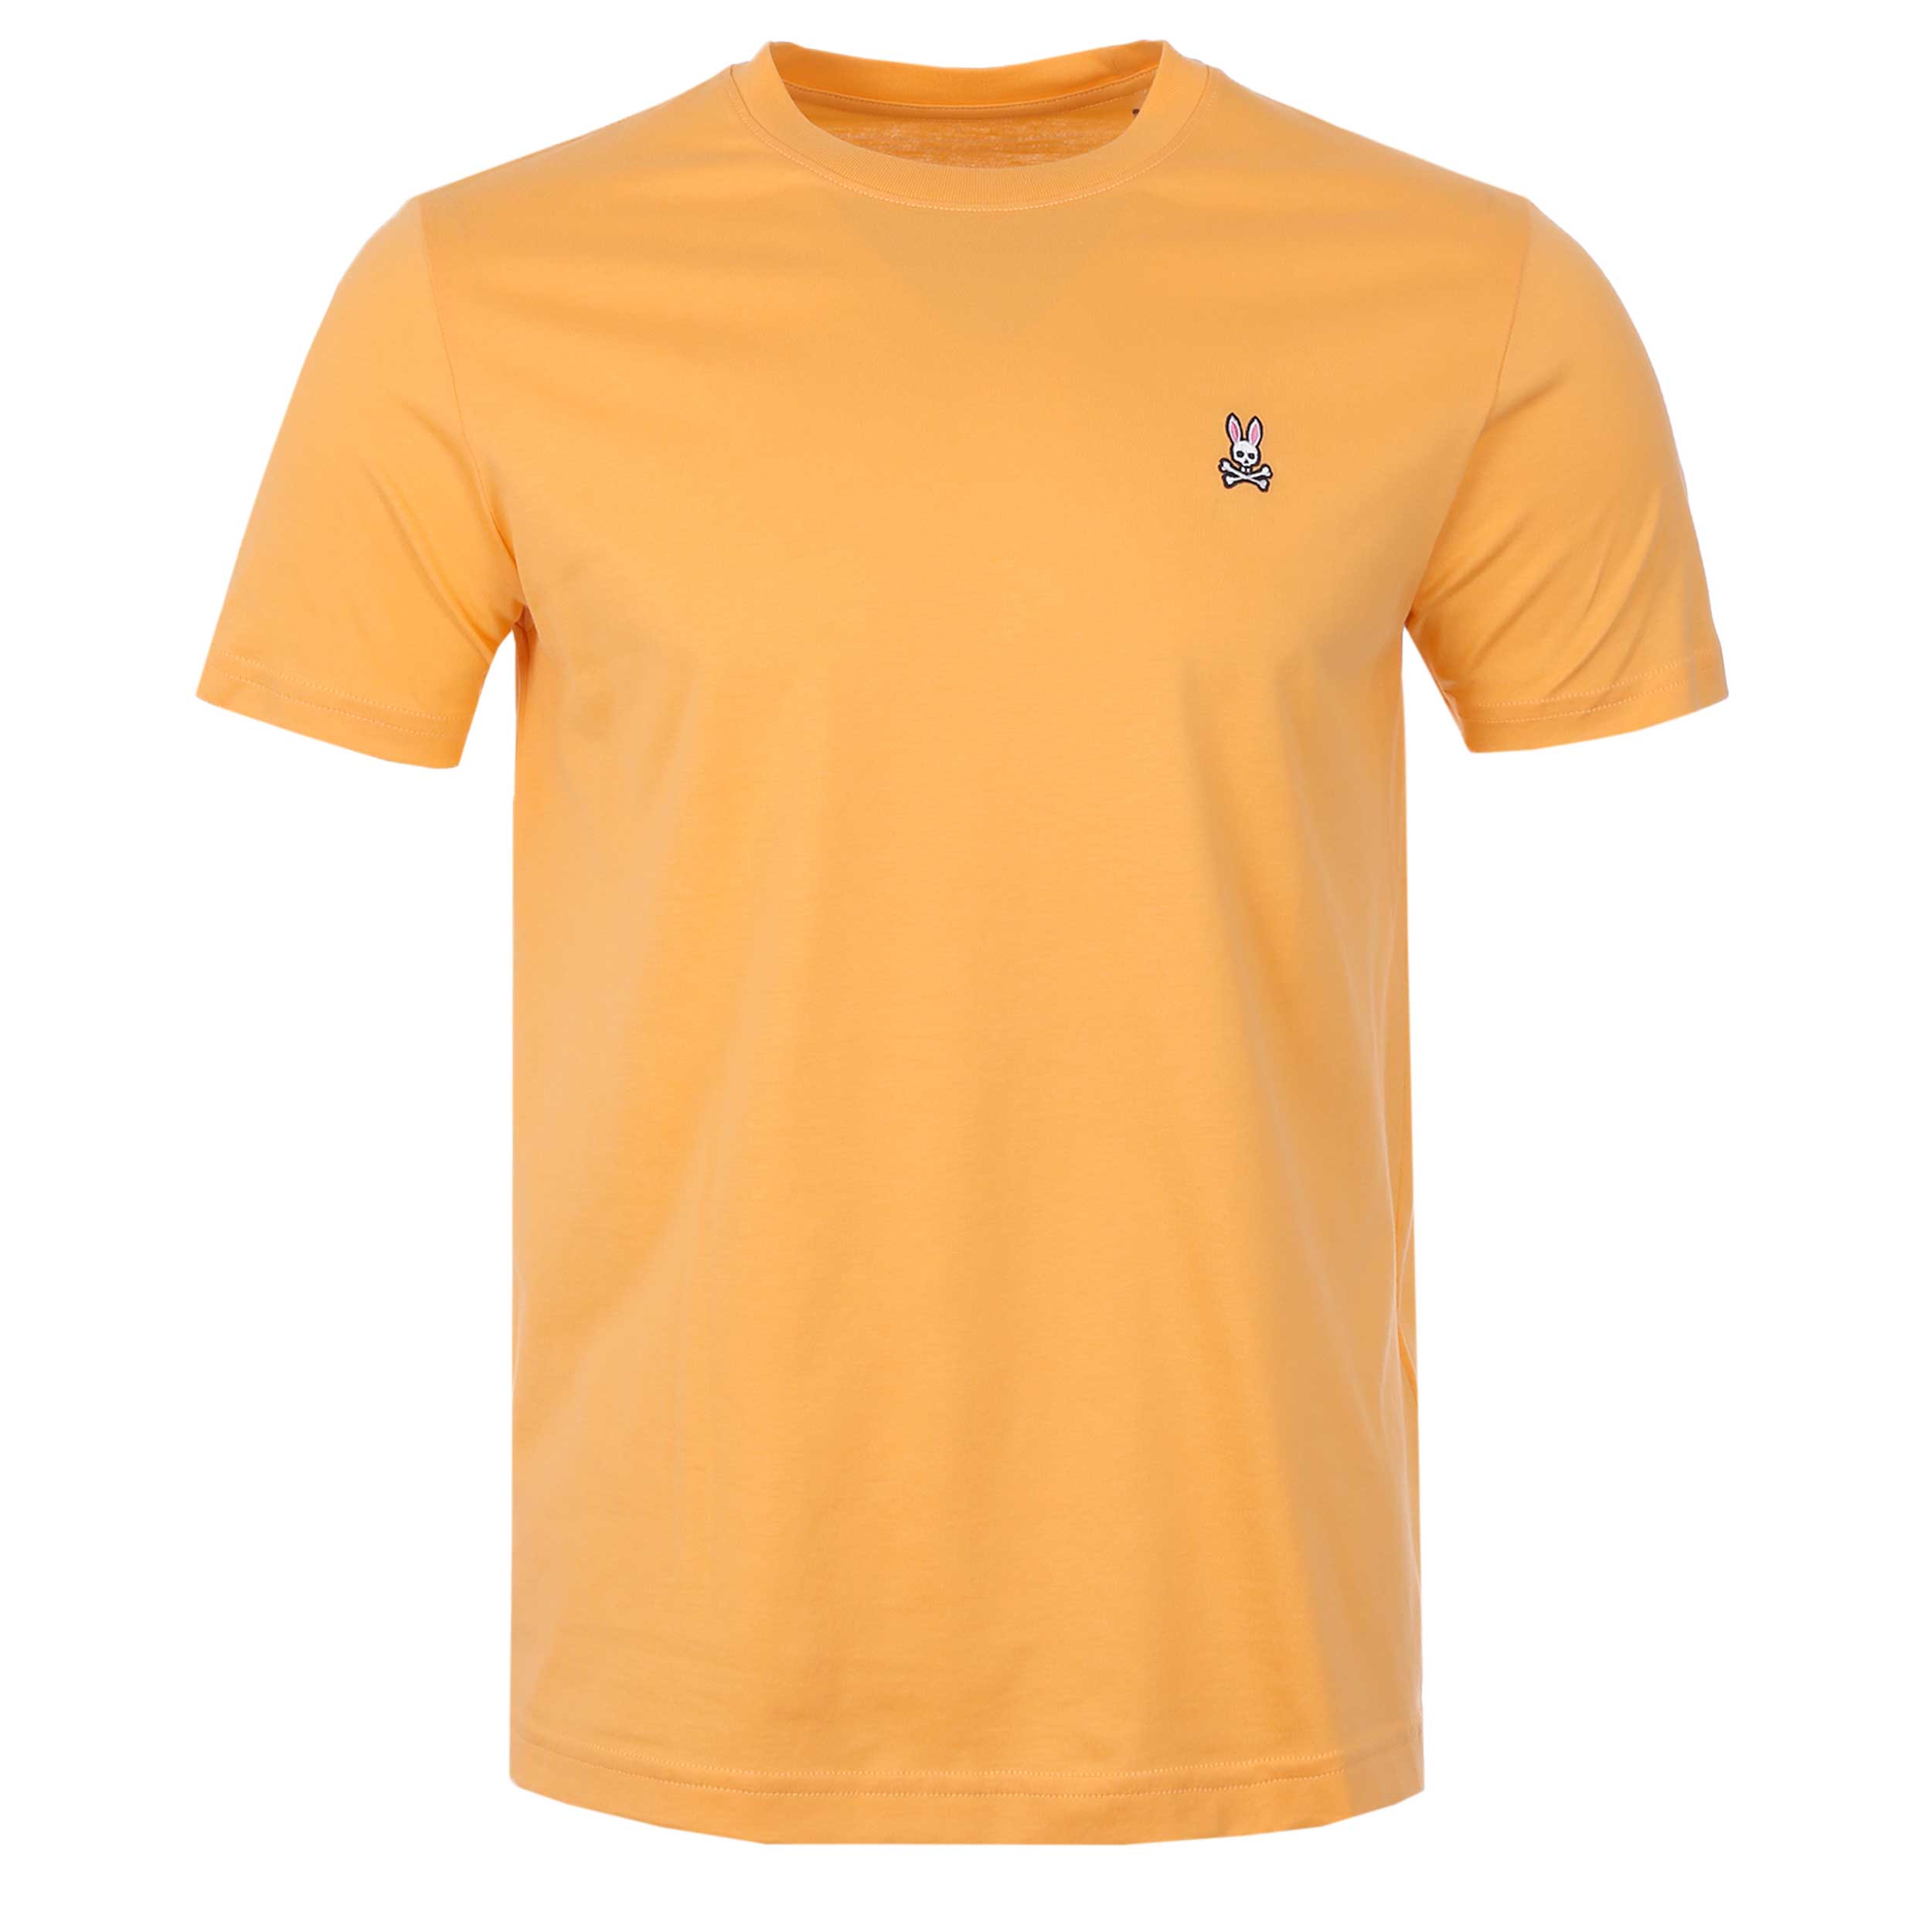 Psycho Bunny Classic T-Shirt in Mock Orange